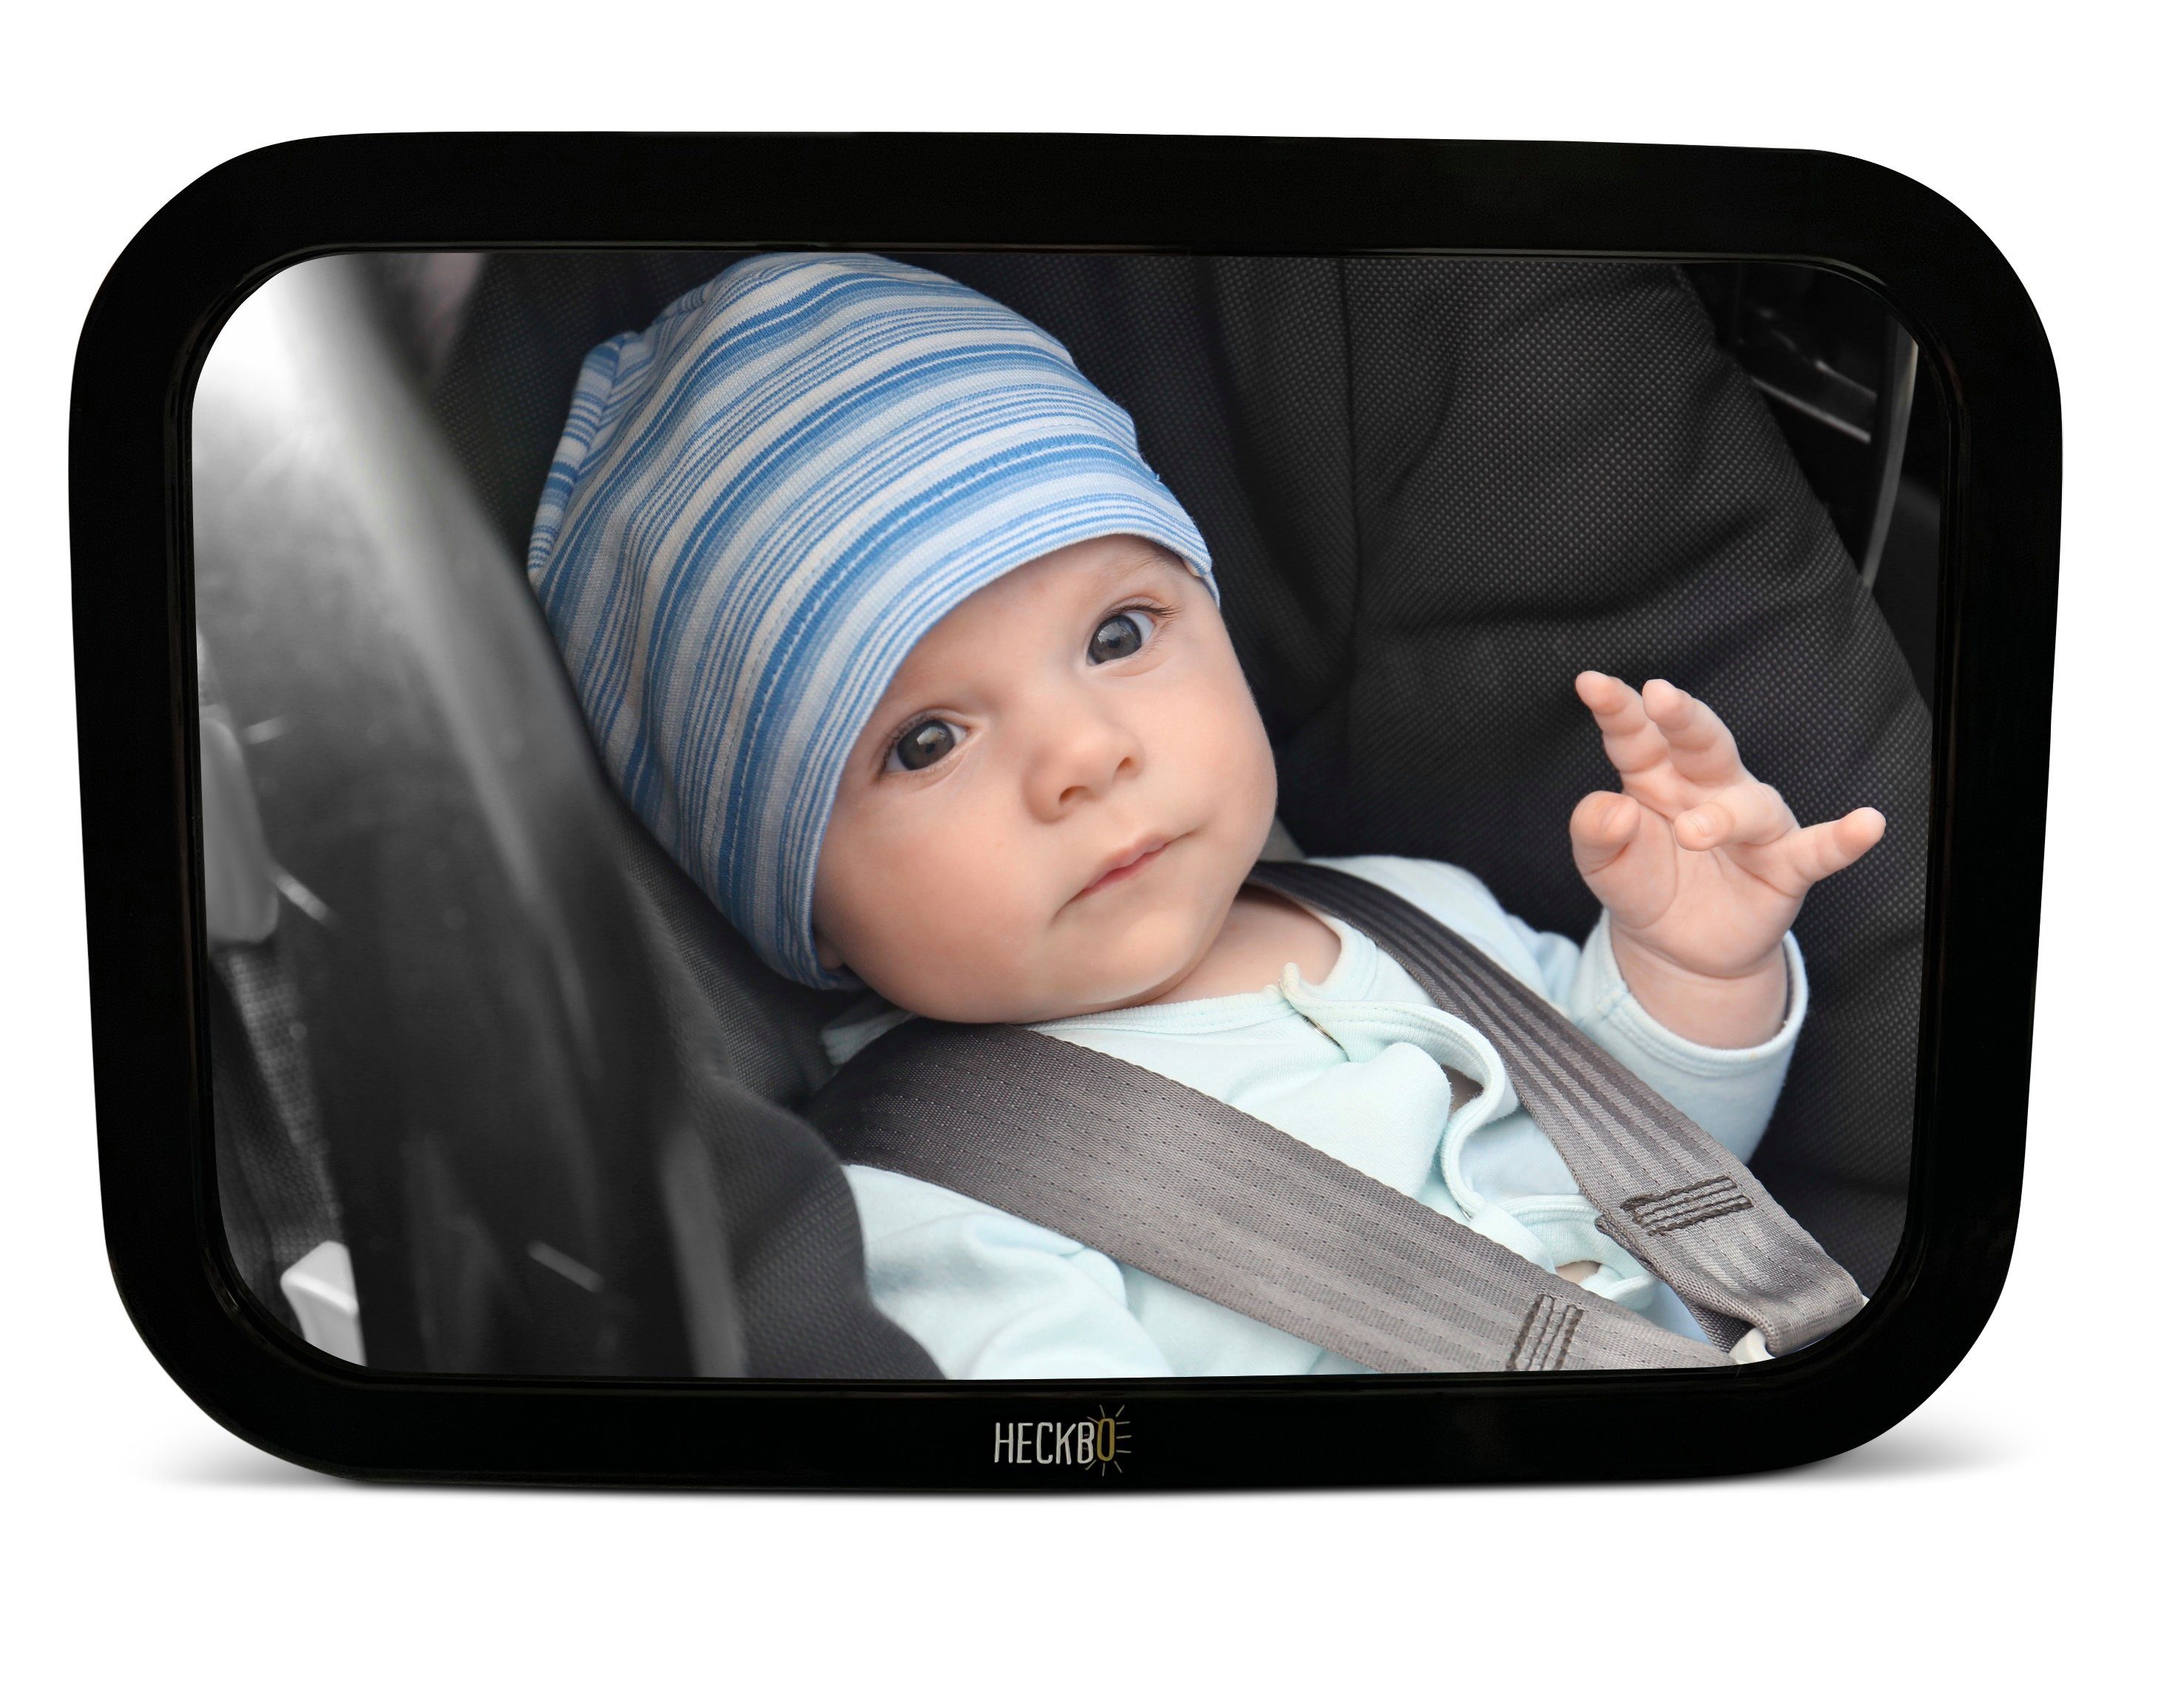 Autospiegel Baby Rücksitz - Rücksitzspiegel für Babys/Kinder Auto